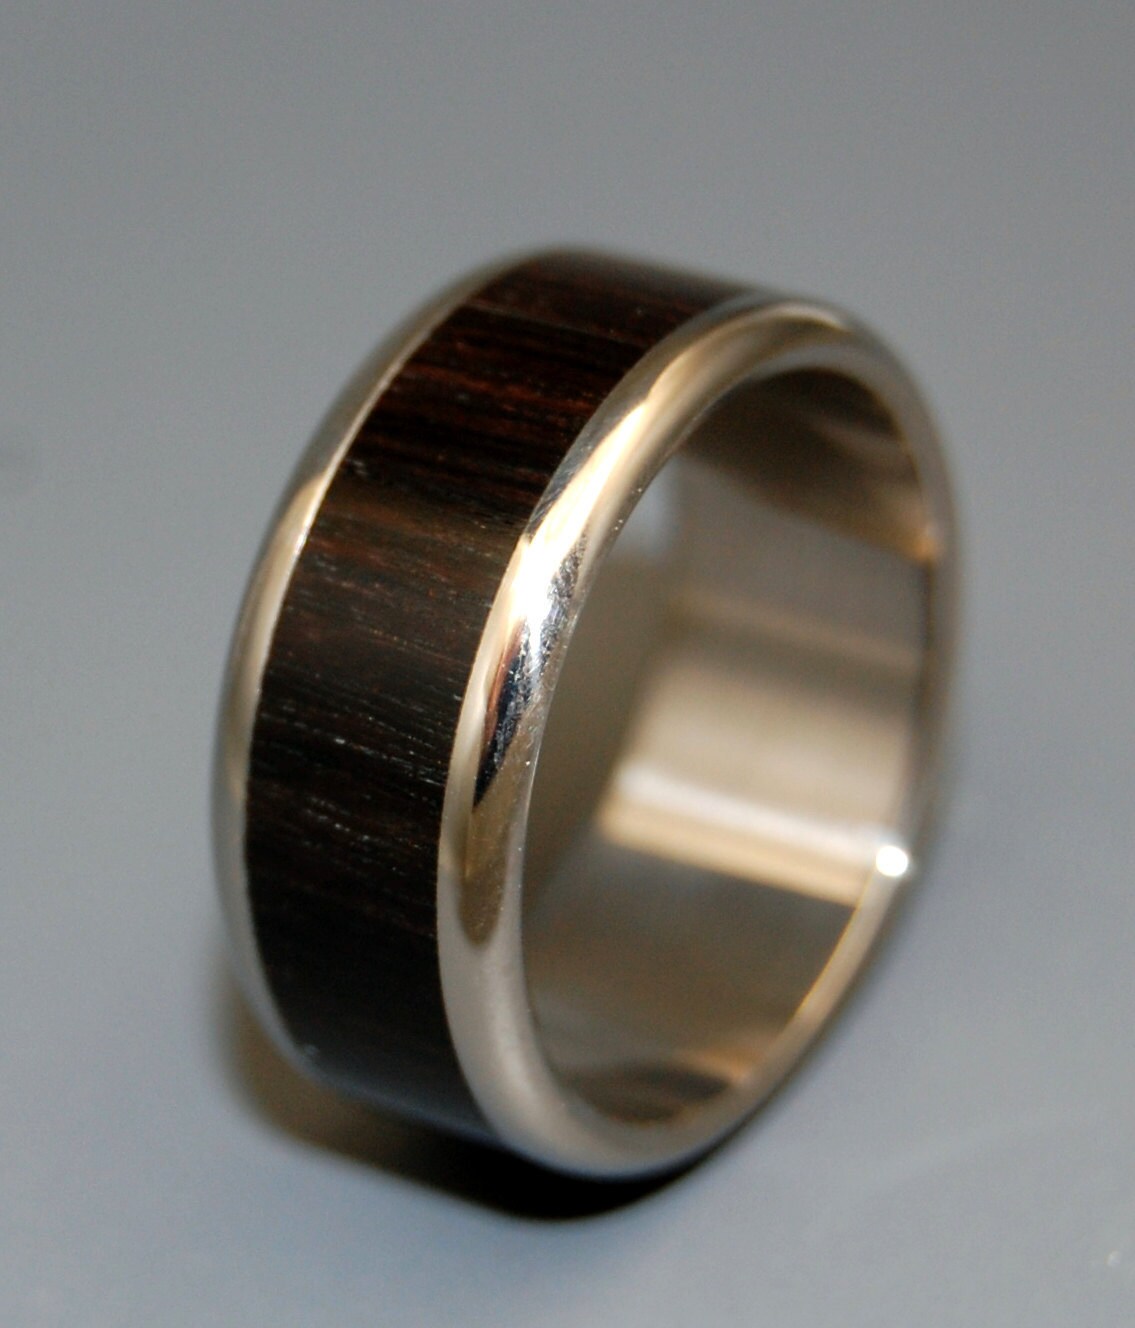 Wooden Wedding Rings titanium wedding rings box elder wood | Etsy